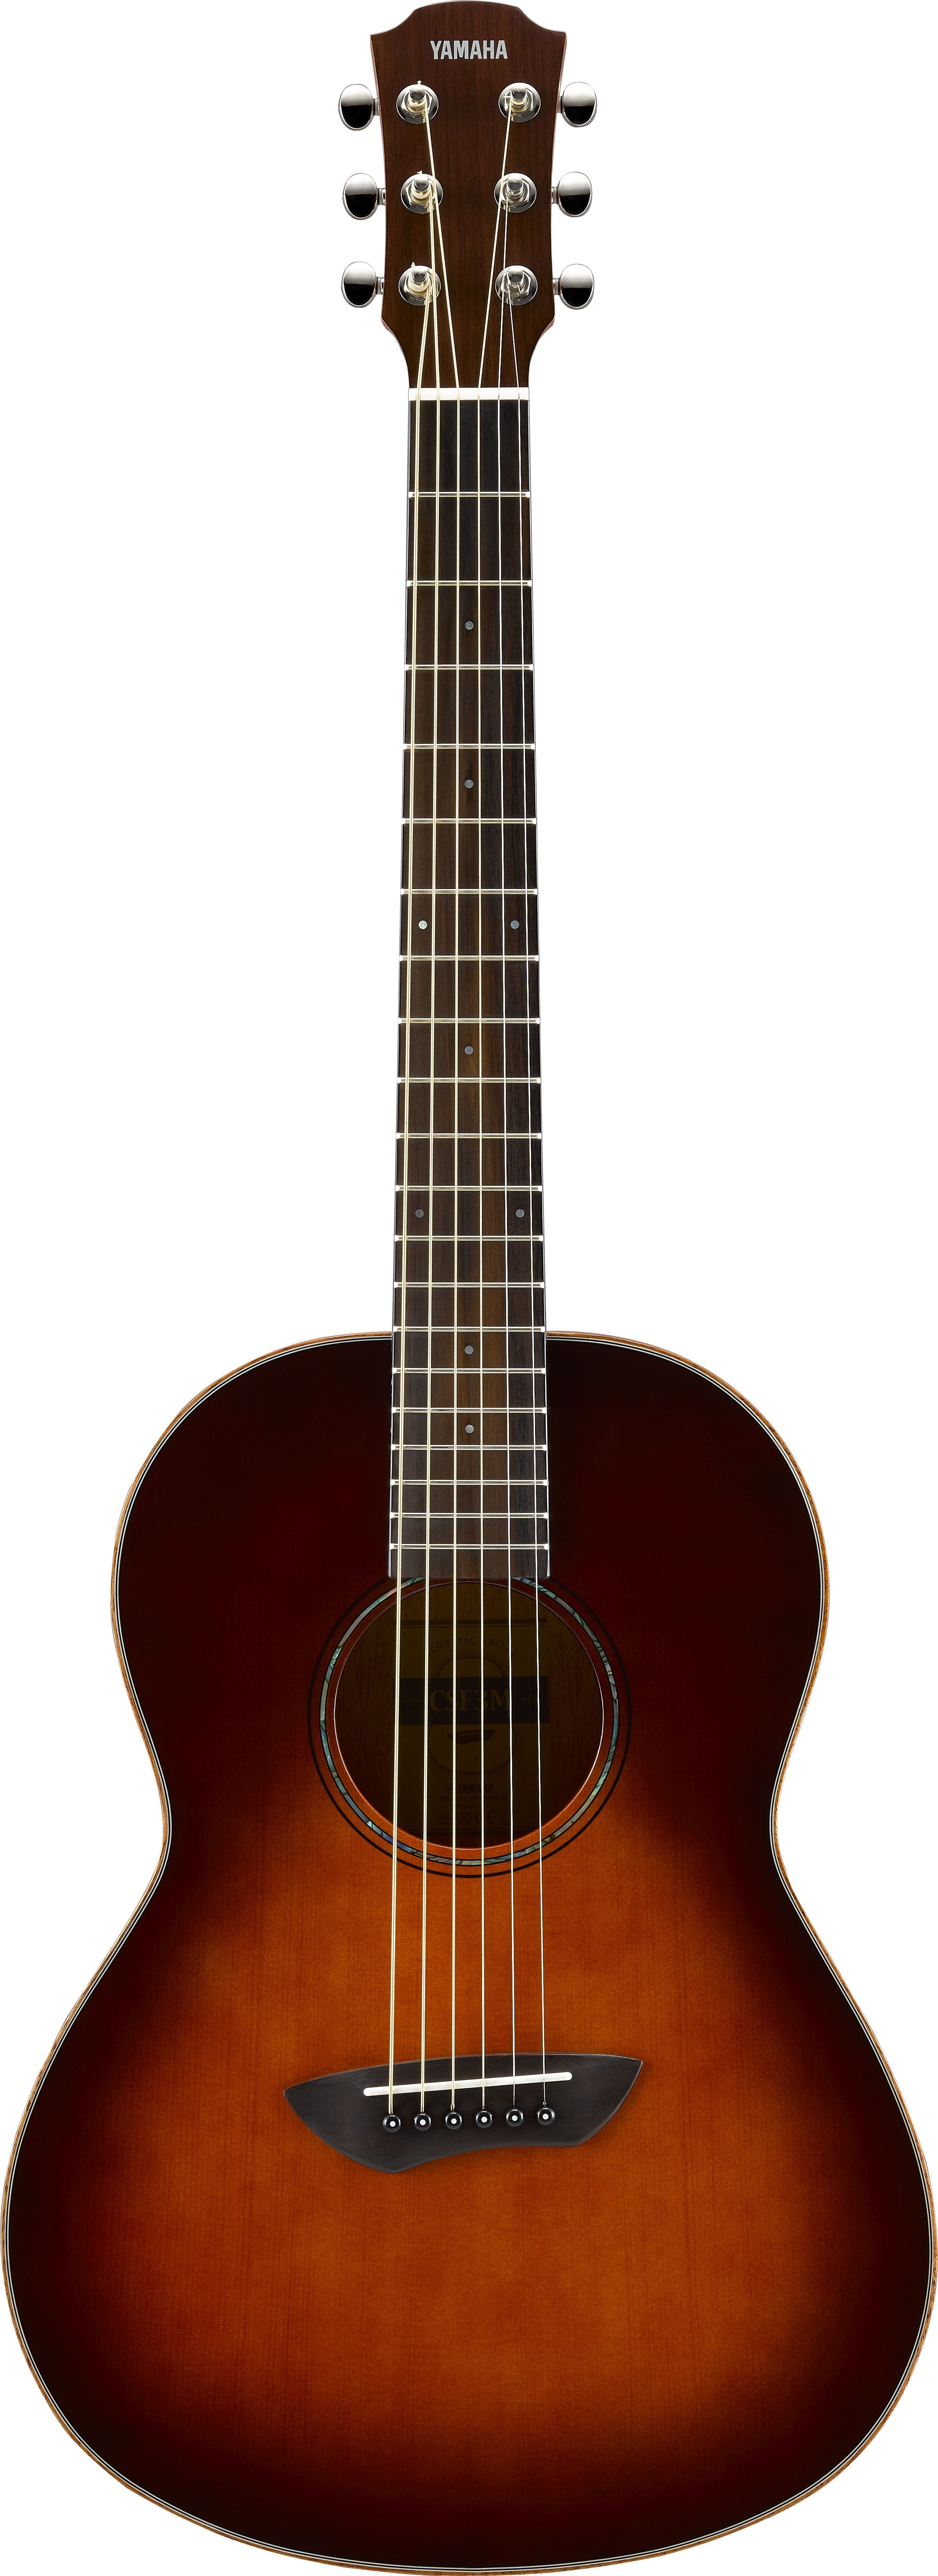 Yamaha CSF3M Travel Acoustic-Electric Guitar - Tobacco Brown Sunburst